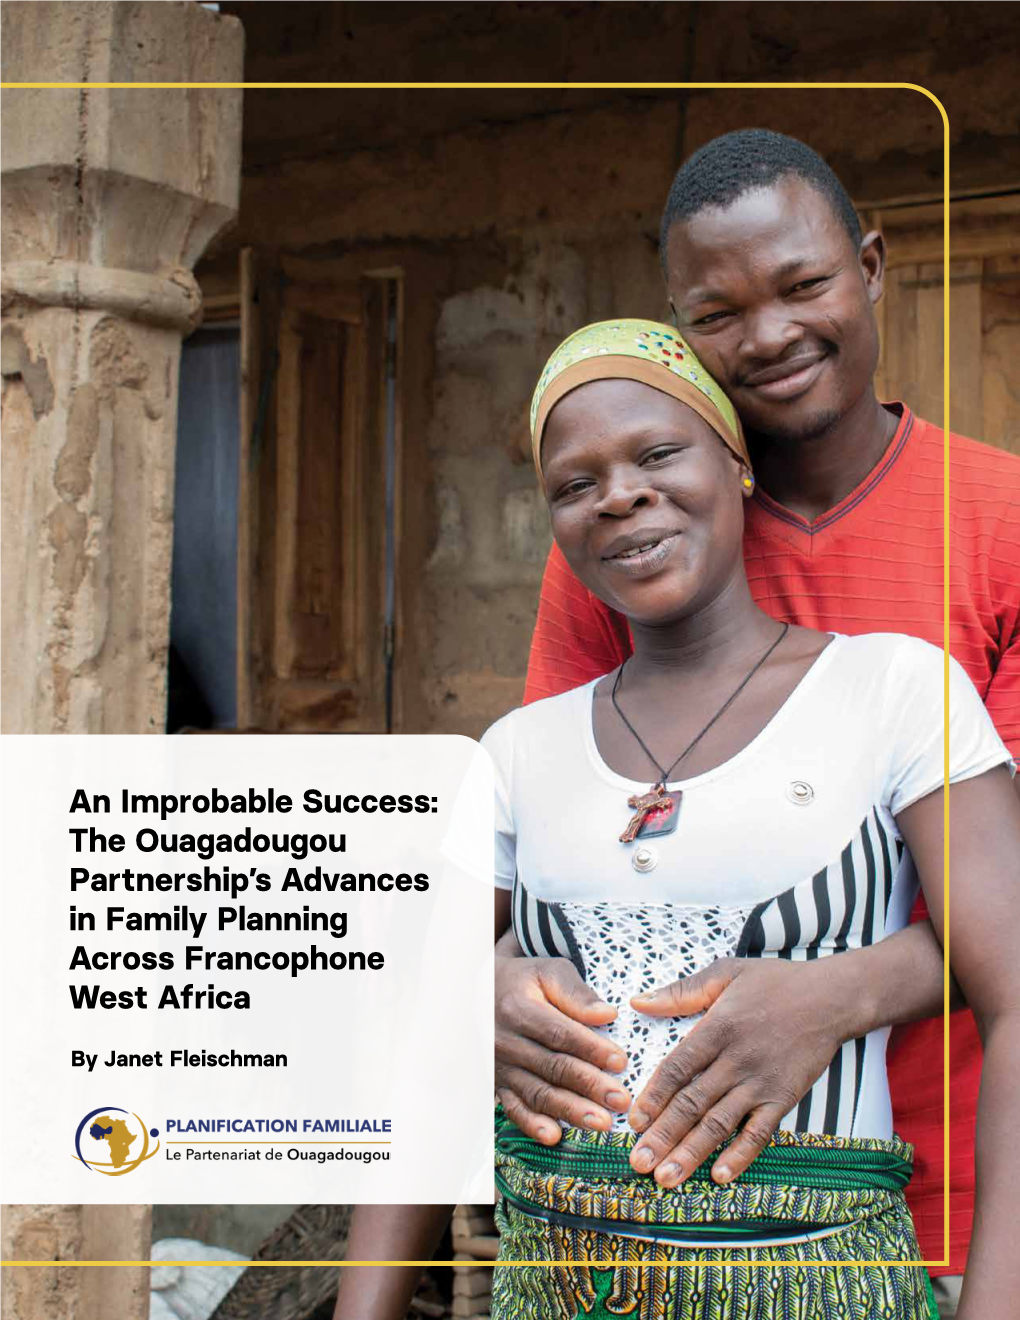 The Ouagadougou Partnership's Advances in Family Planning